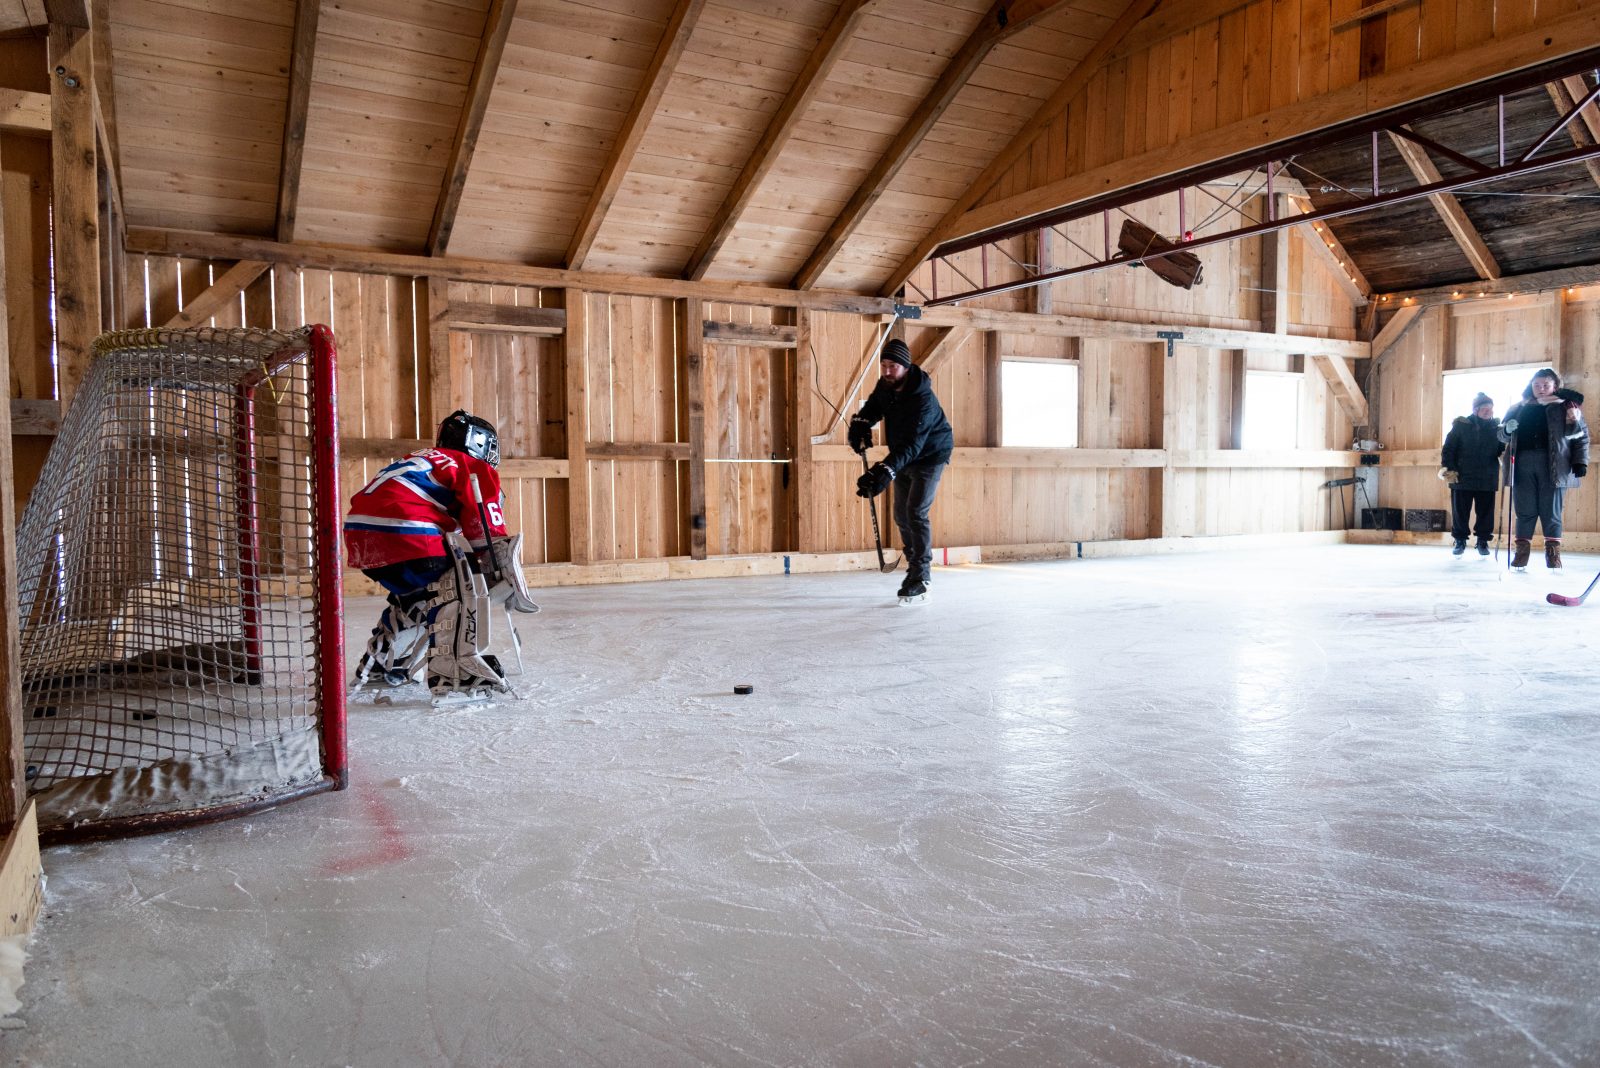 Sa patinoire attire l’attention de la Ligue nationale de hockey